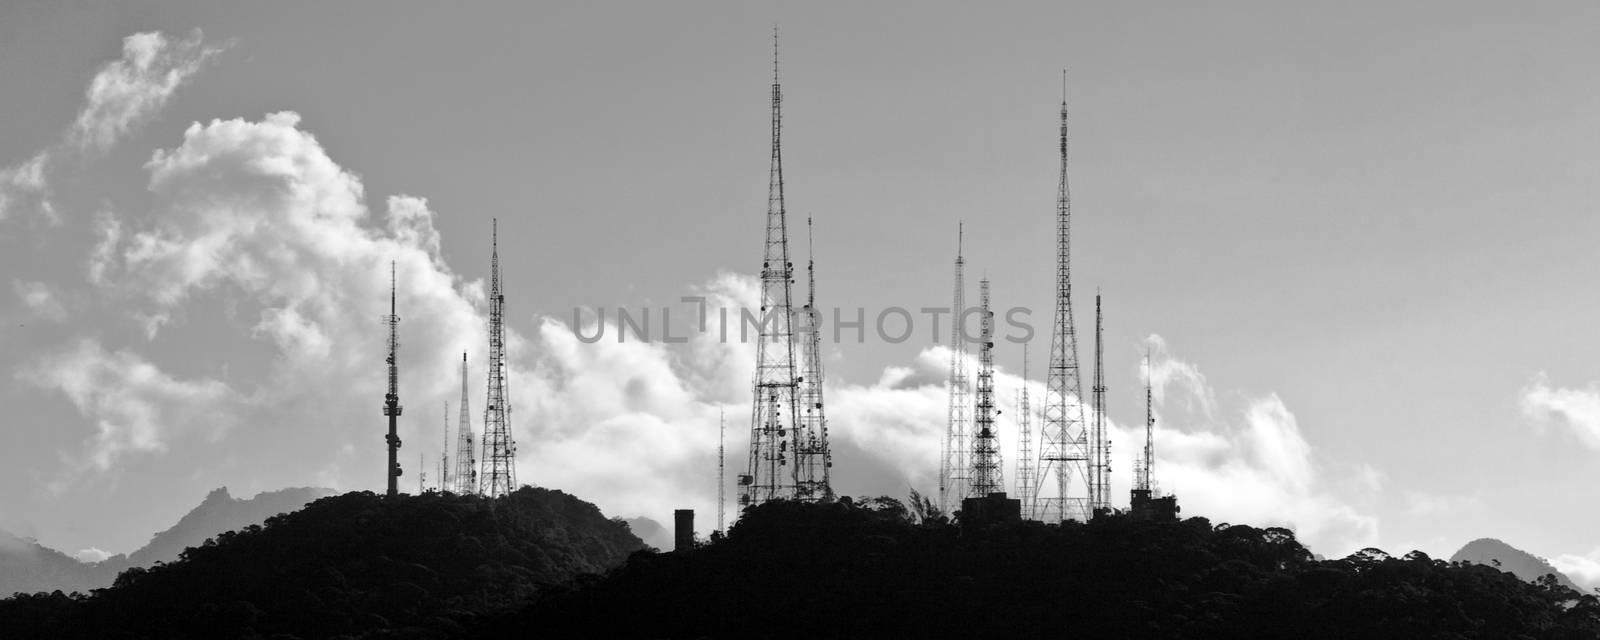 Silhouette of radio antennas by CelsoDiniz